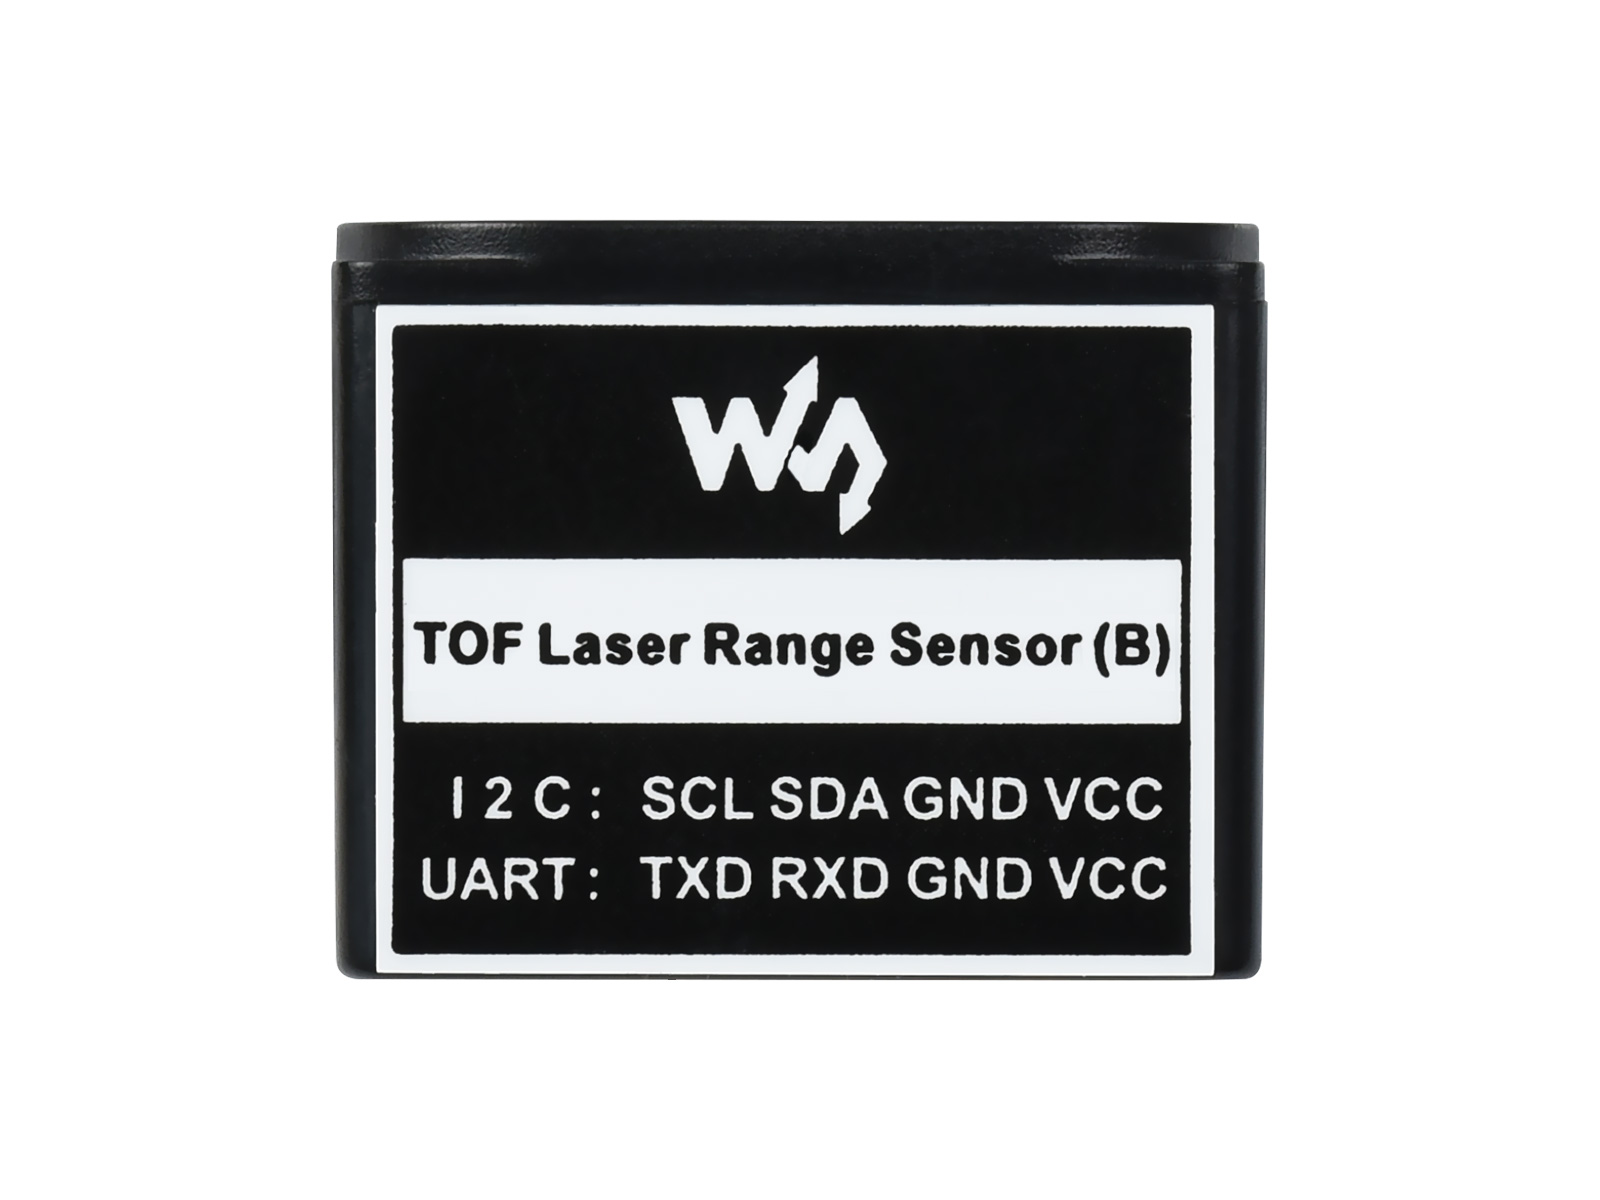 TOF (Time Of Flight) Laser Range Sensor (B), UART / I2C Bus, Long Range